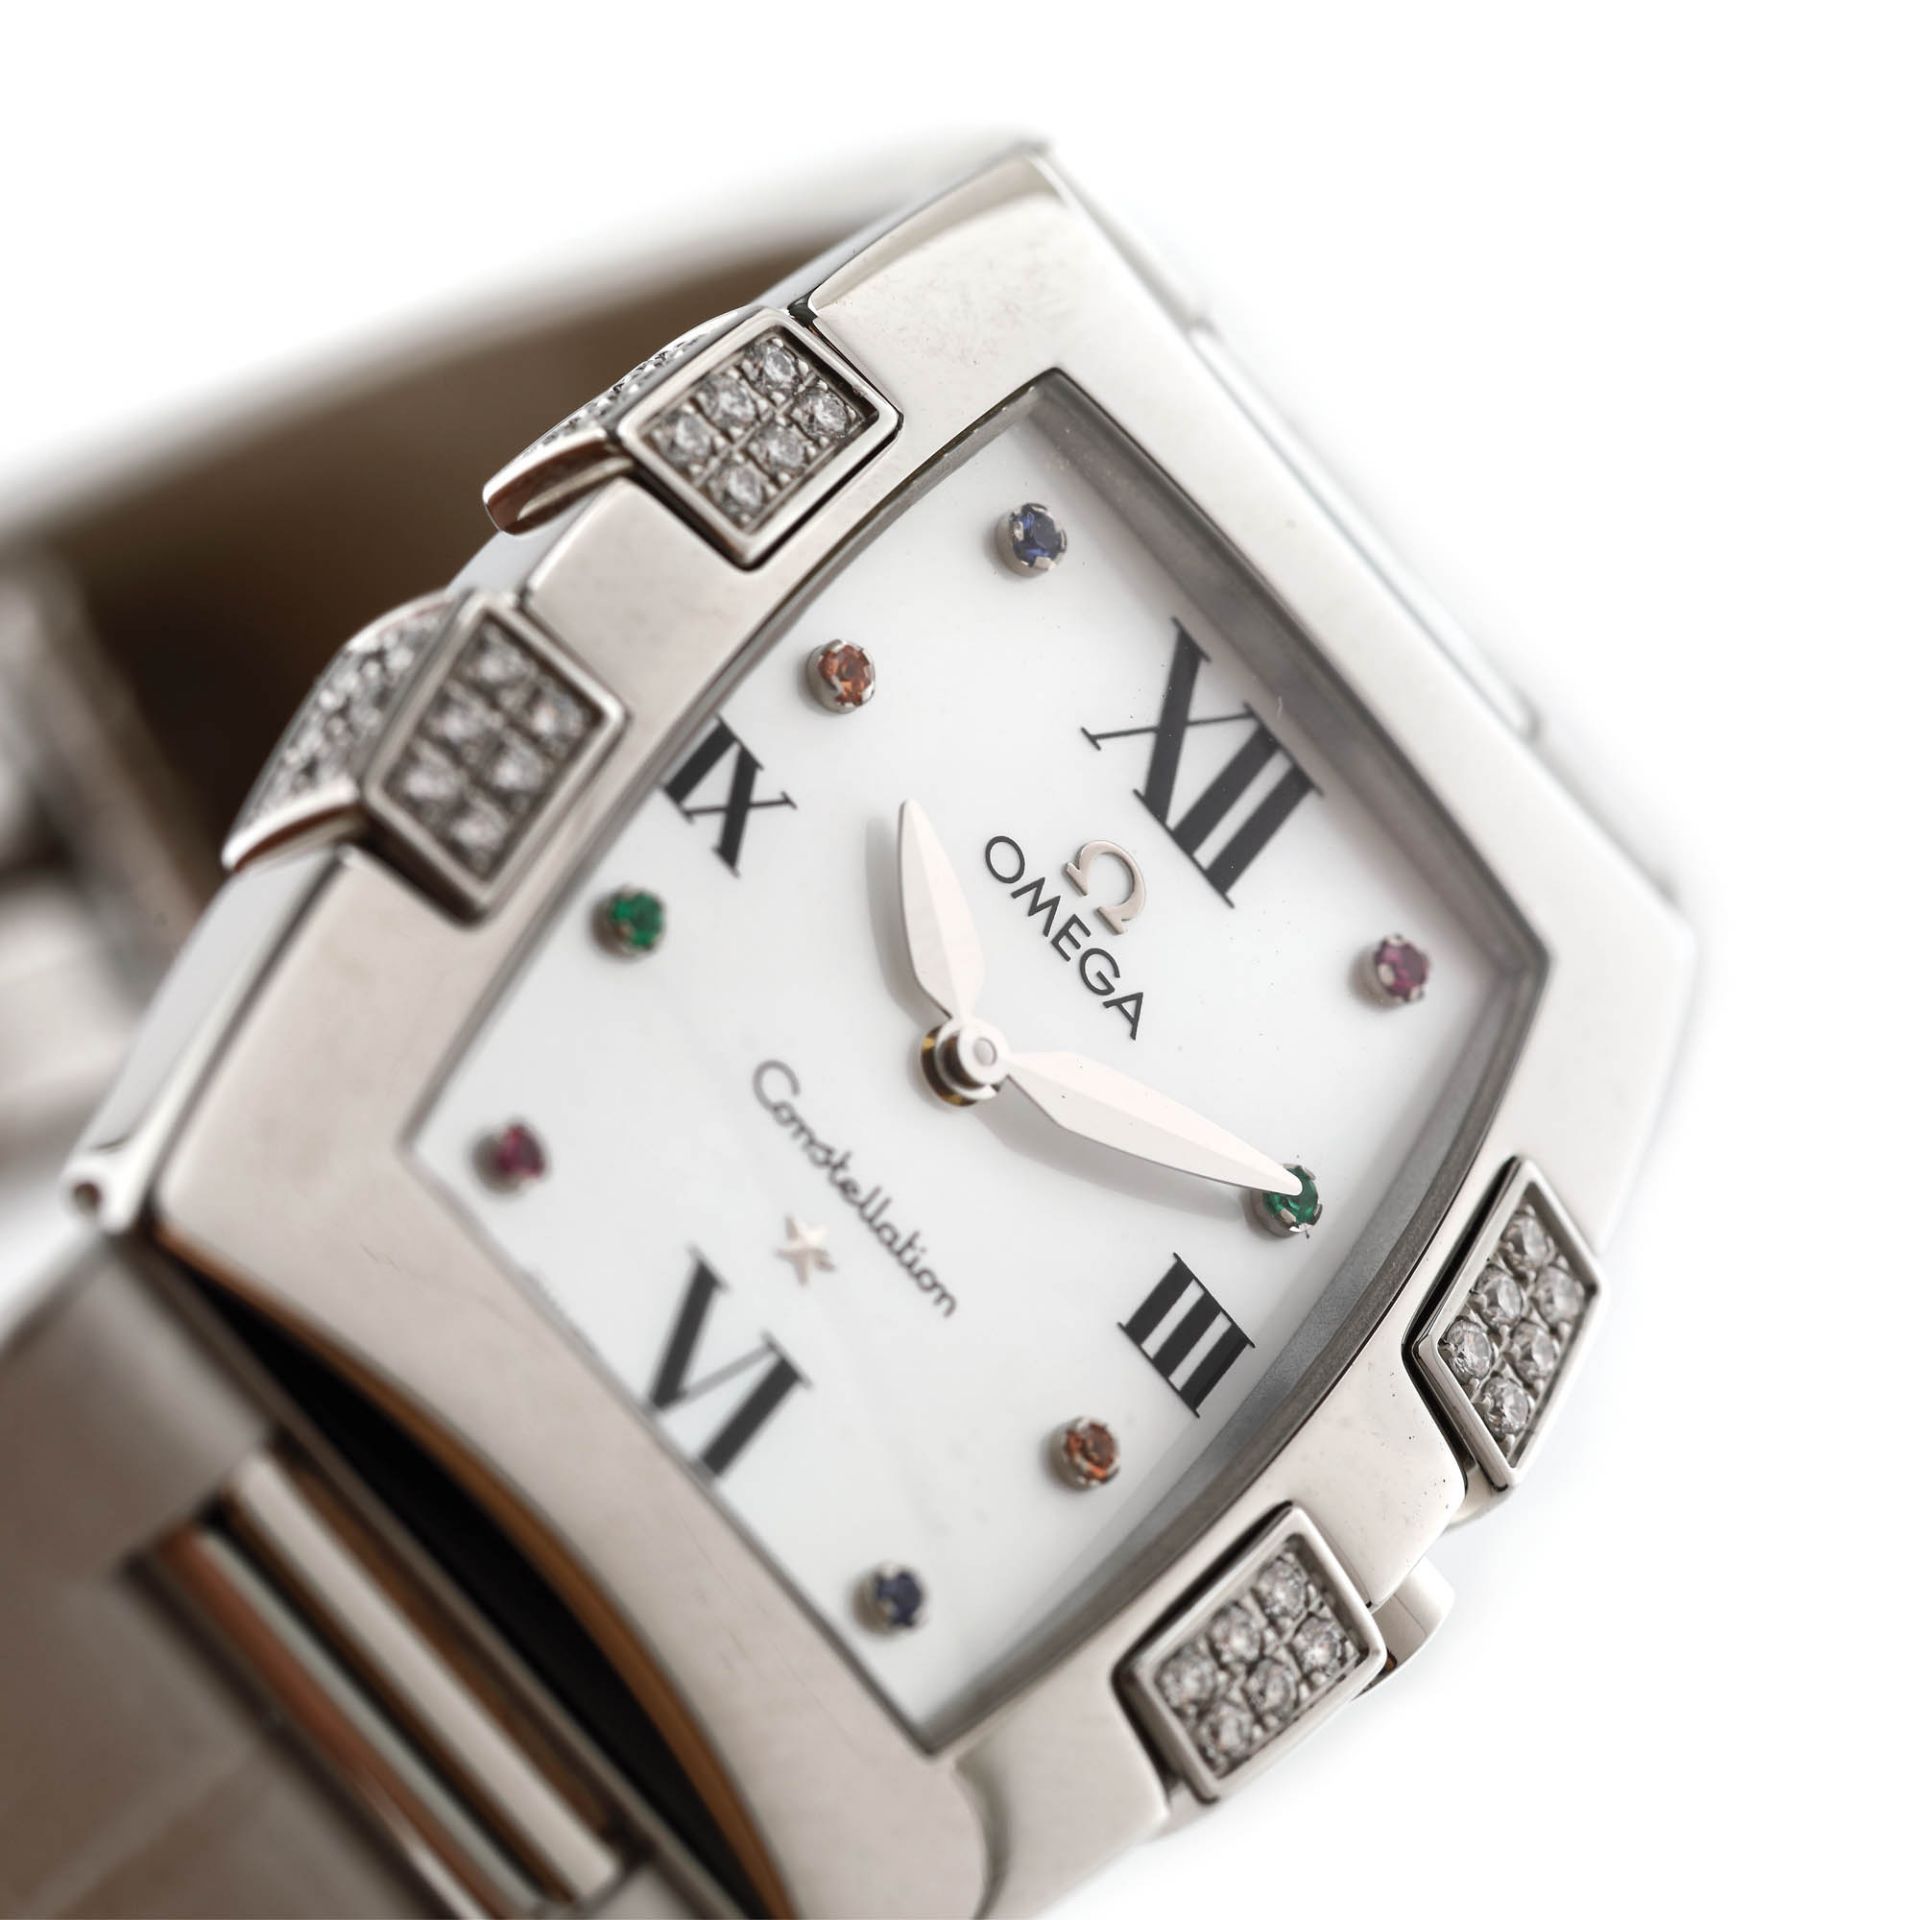 Omega Constellation Quadrella wristwatch, decorated with diamonds, womenOmega Constellation Qua - Image 2 of 4